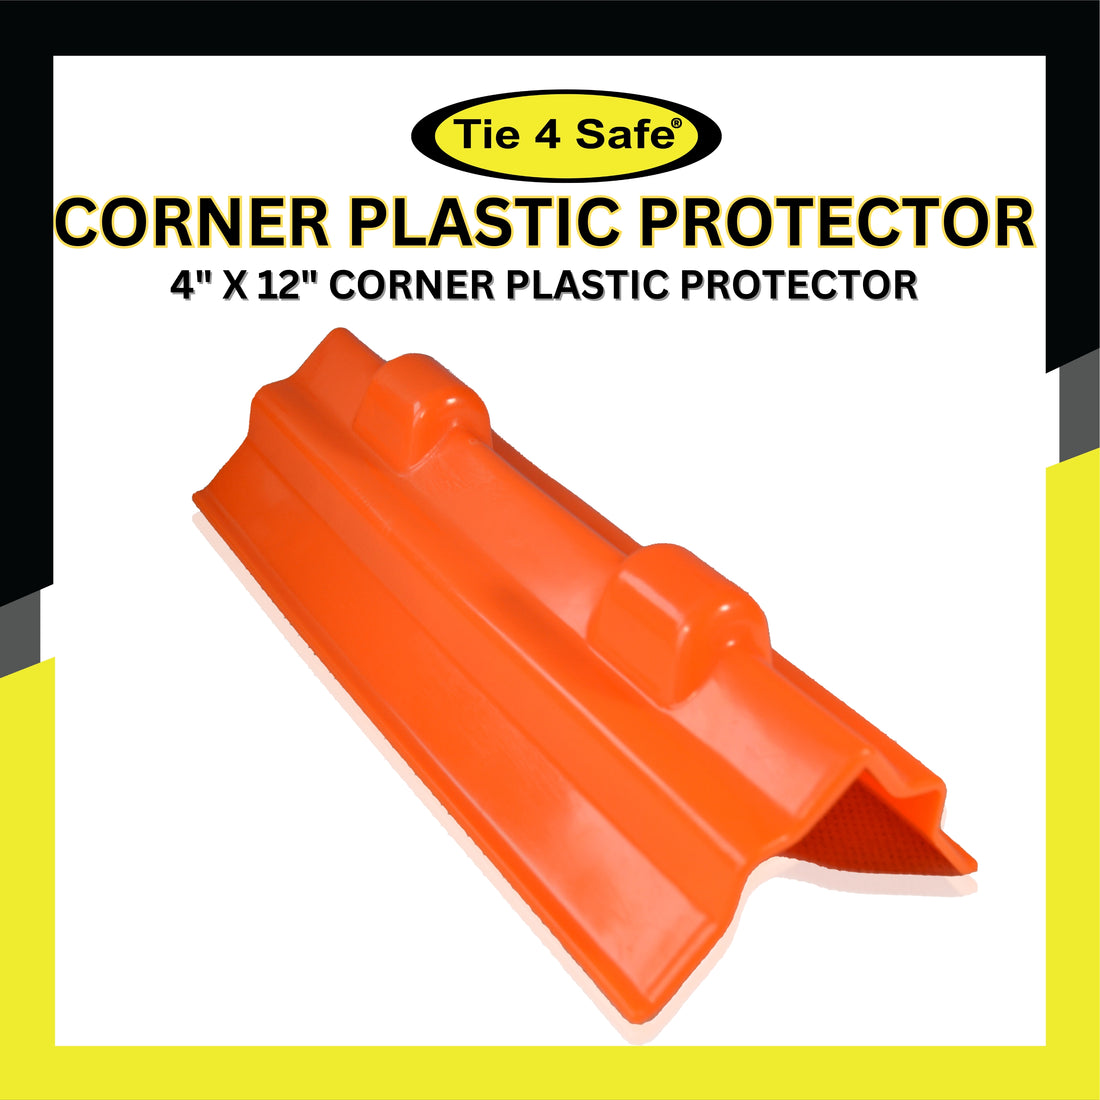 4" x 12" Corner Plastic Protector